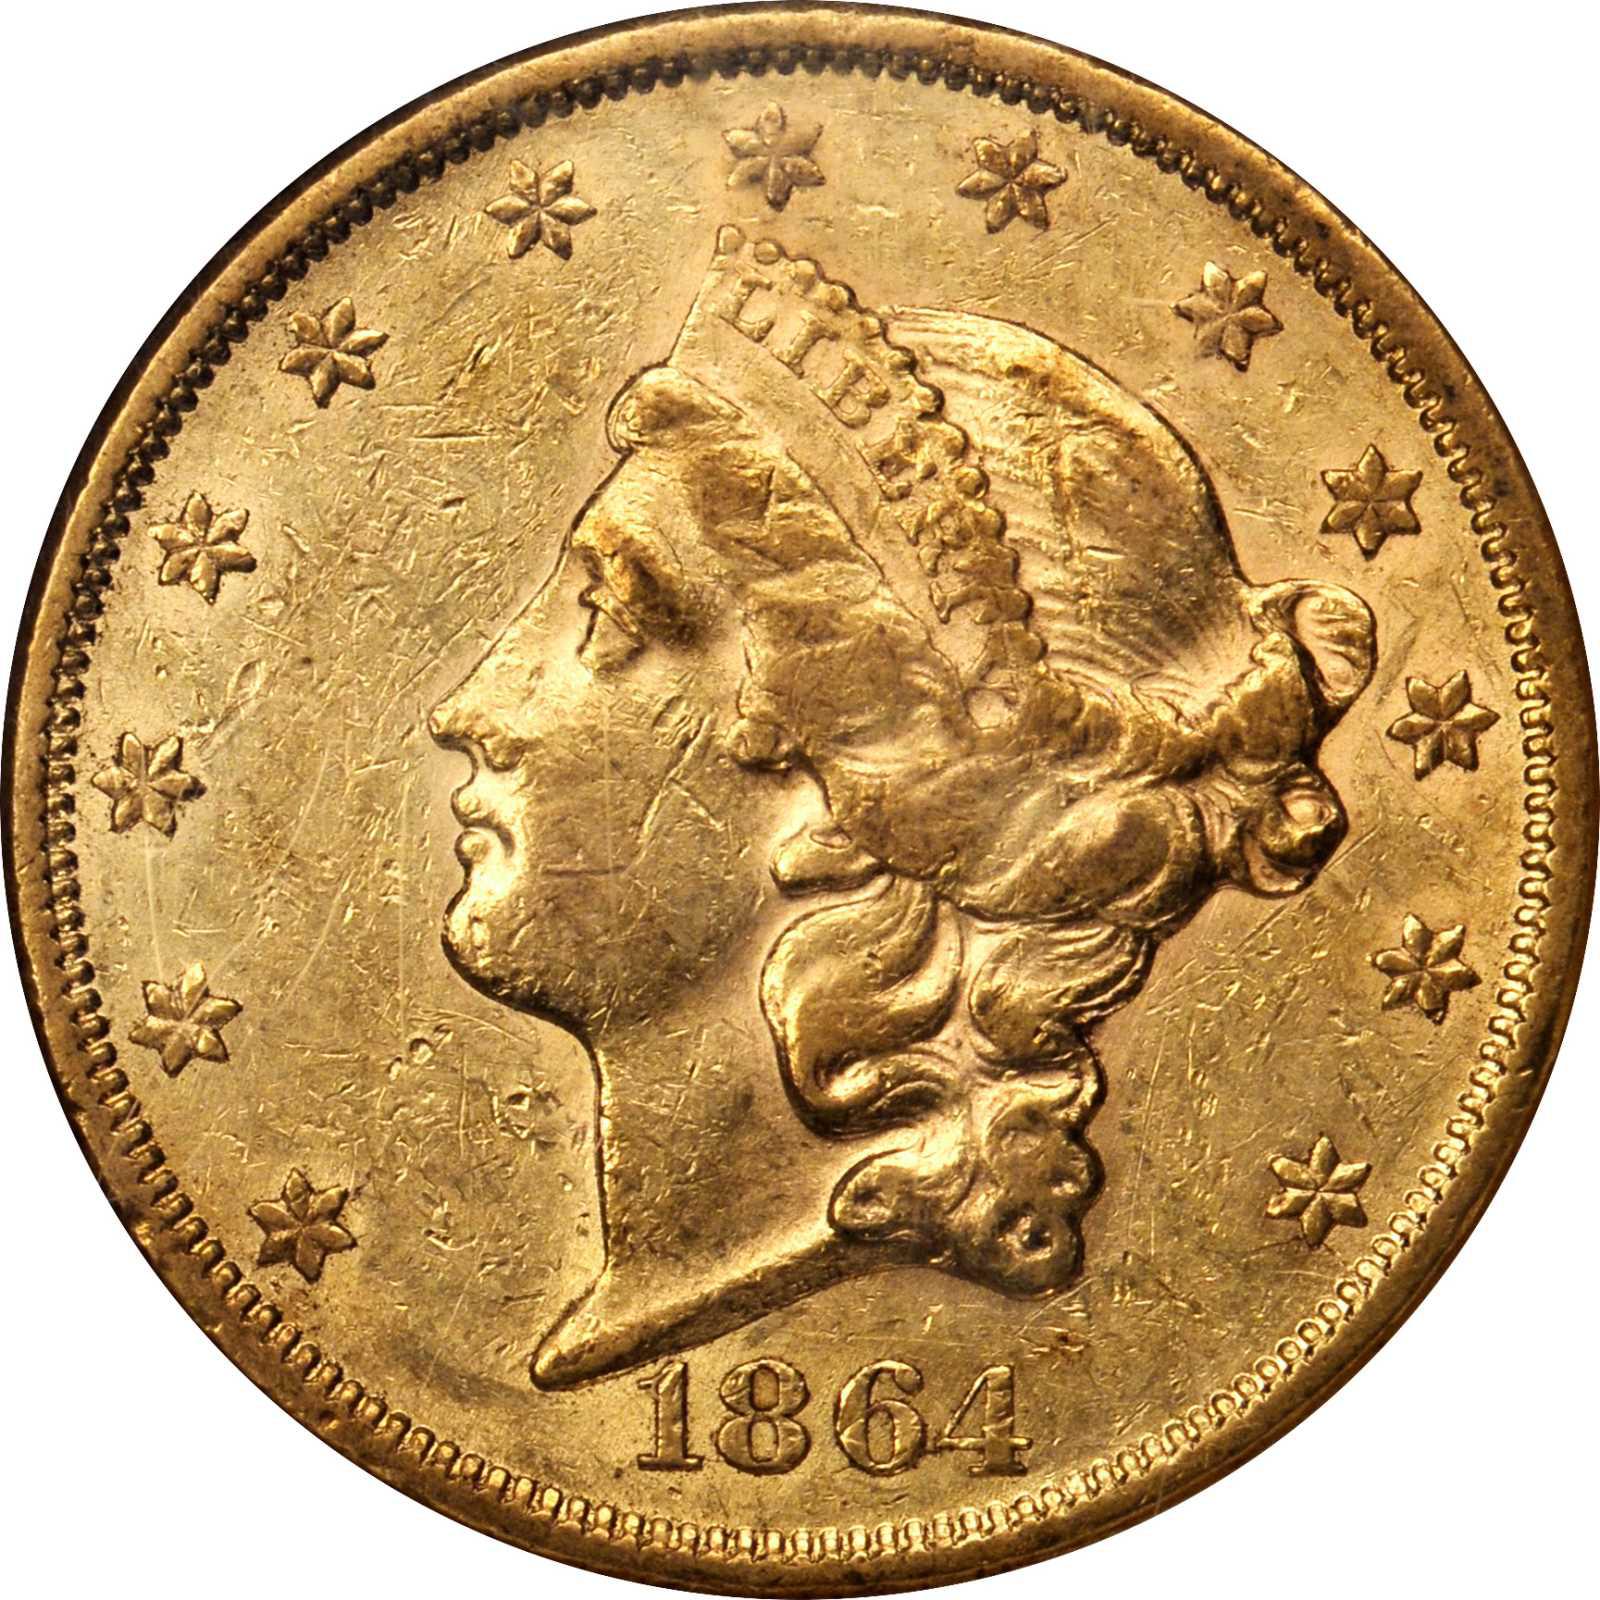 5 dollar us gold coin indian head